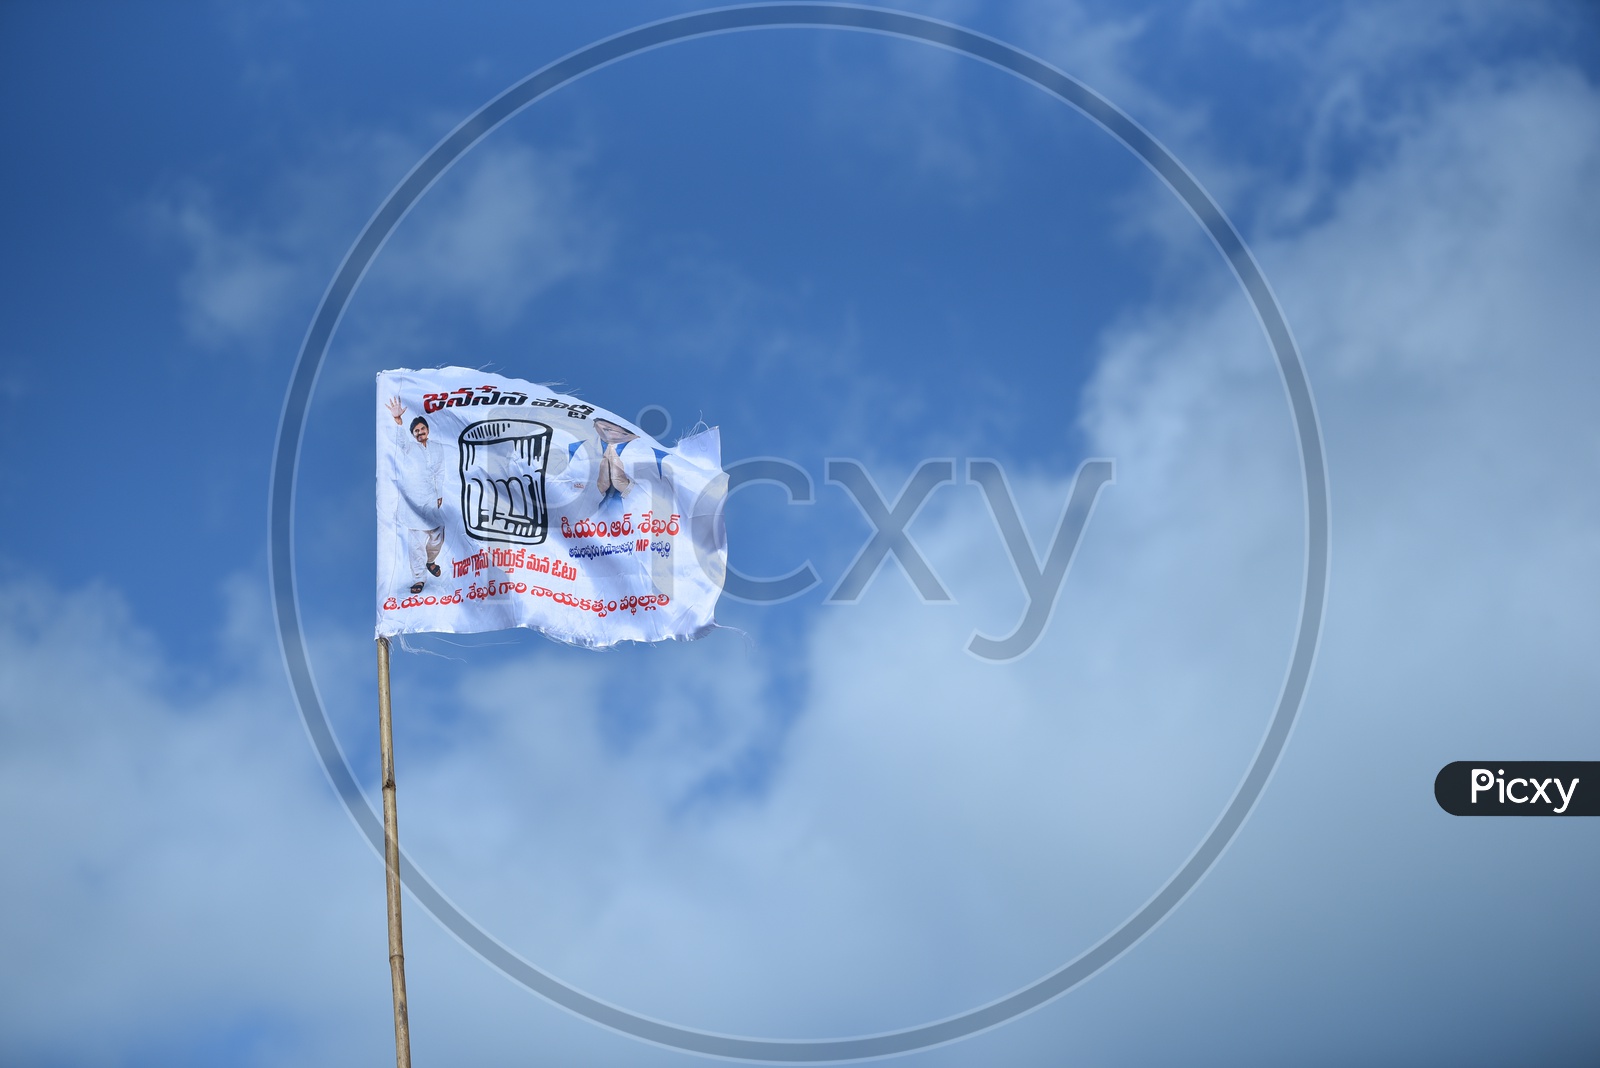 Jana Sena party symbol 'Glass tumbler' on flag